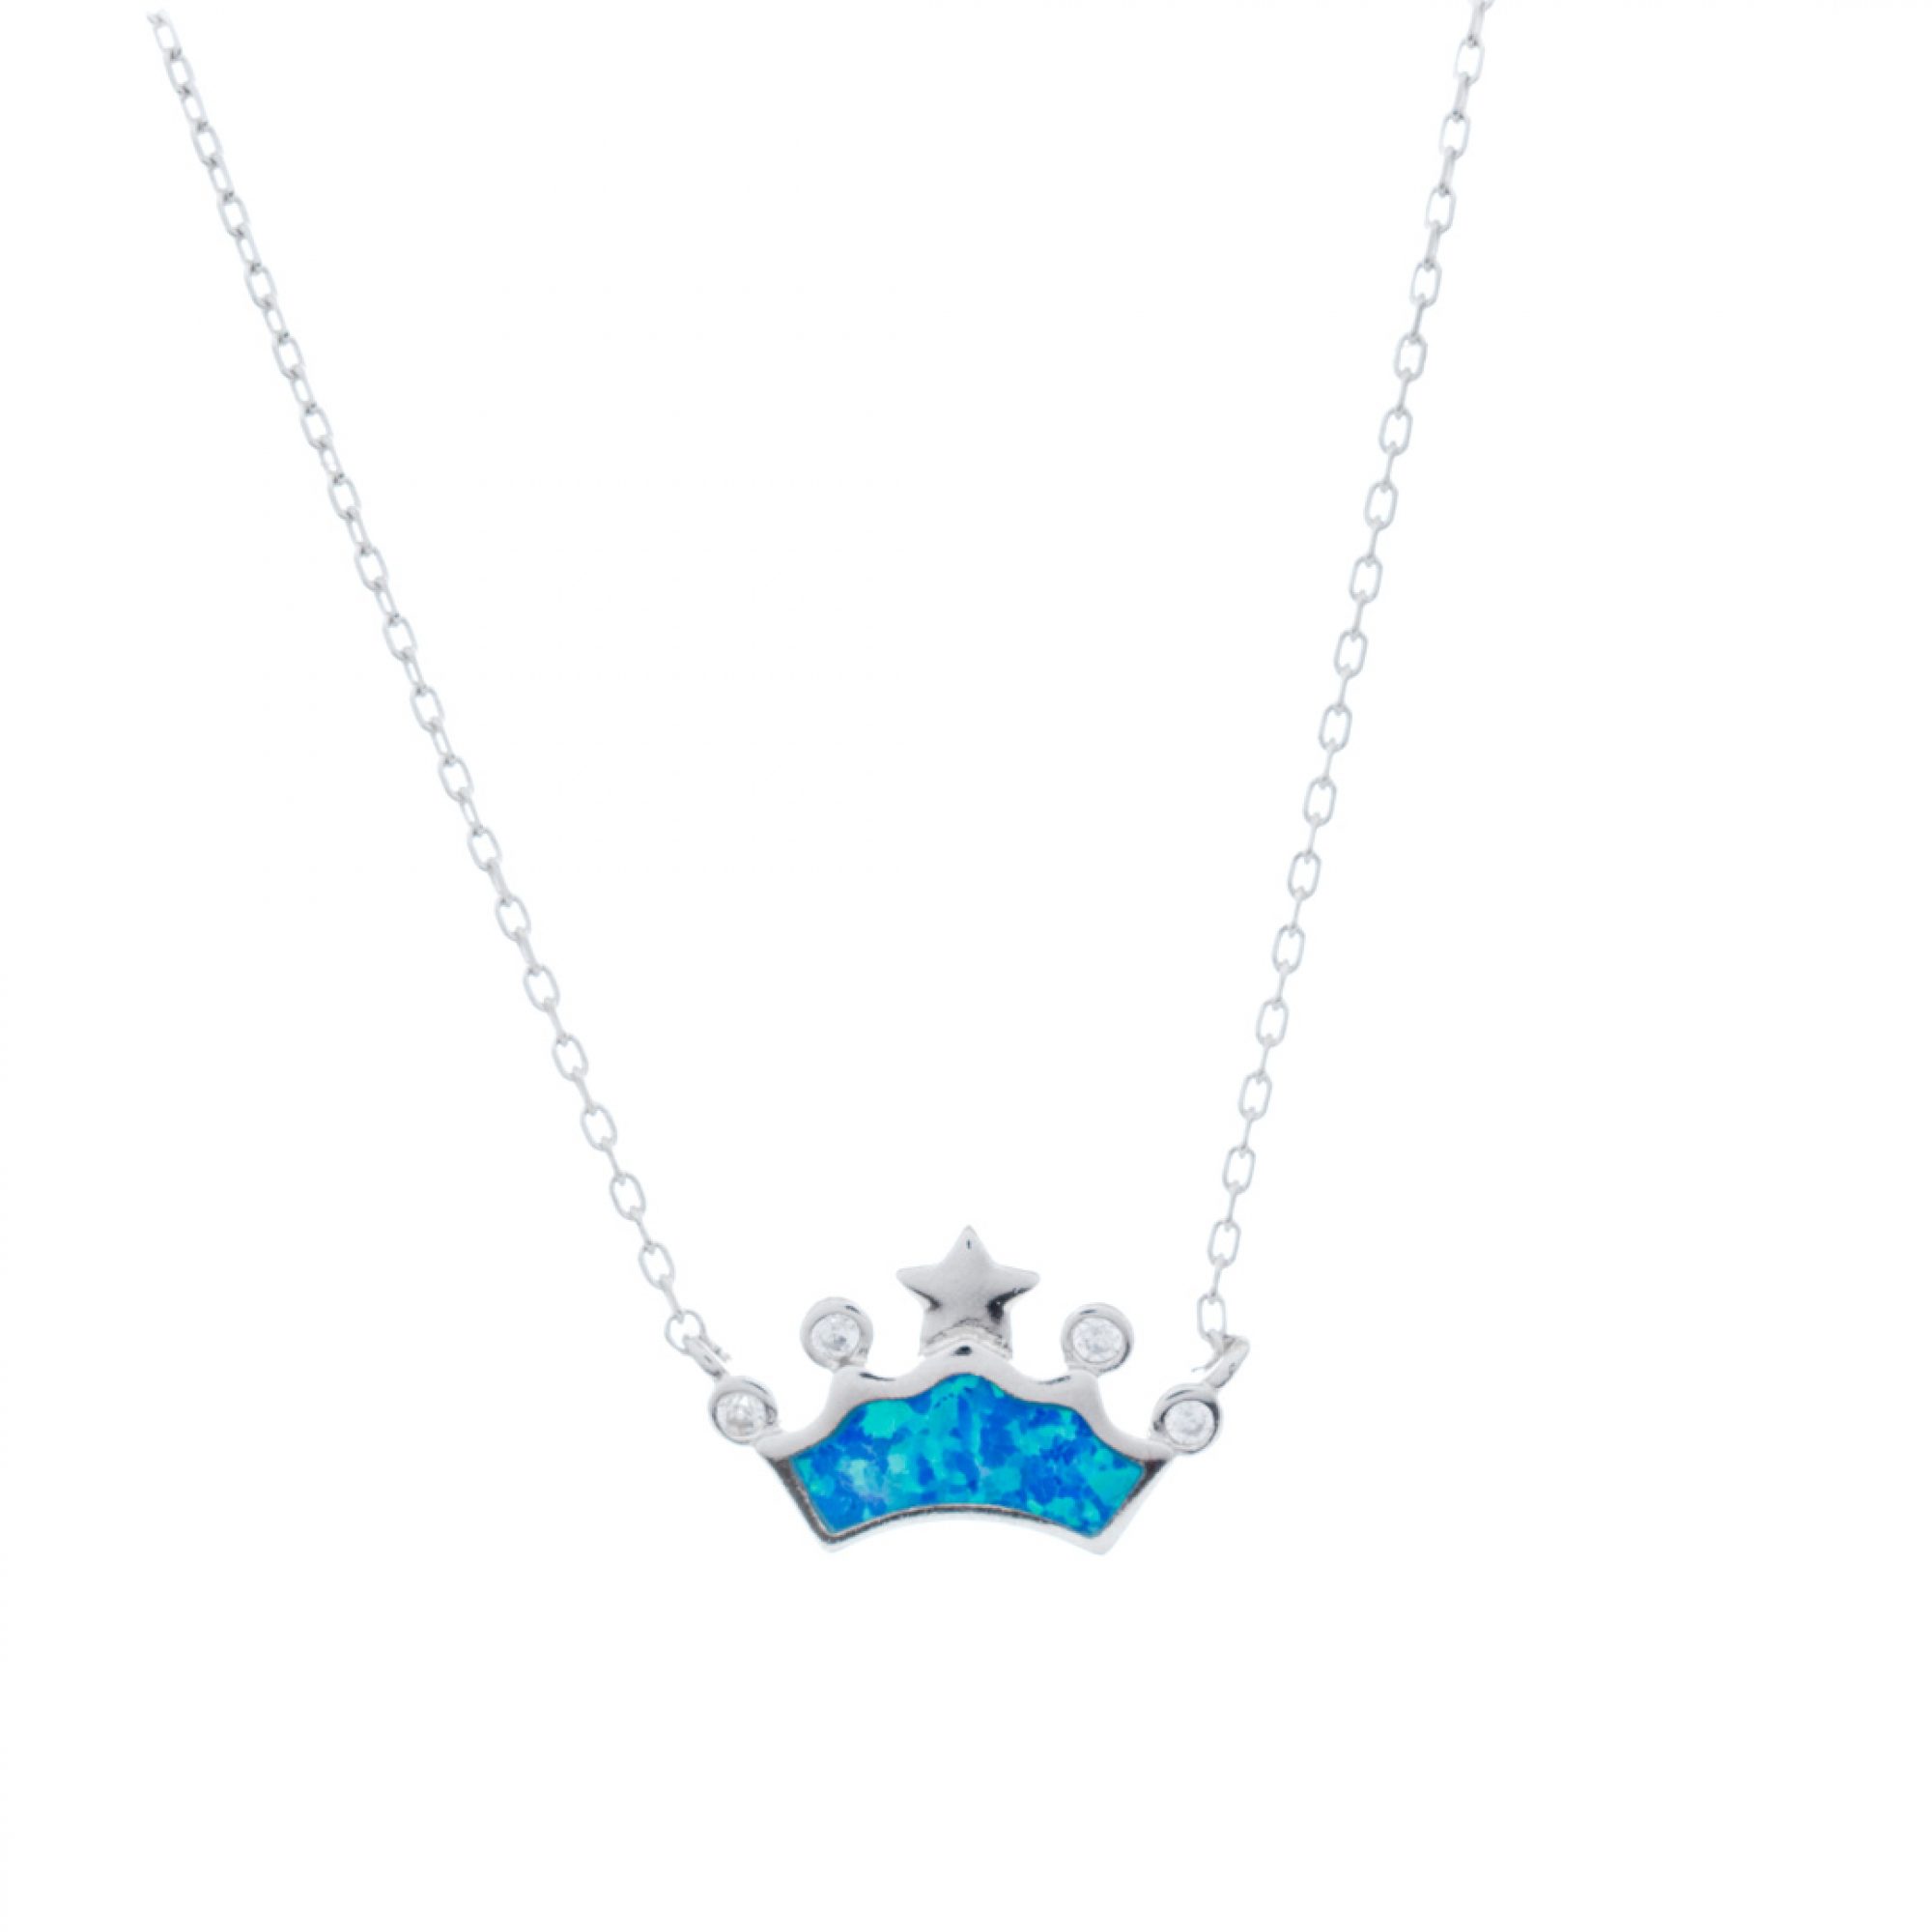 Opal crown necklace